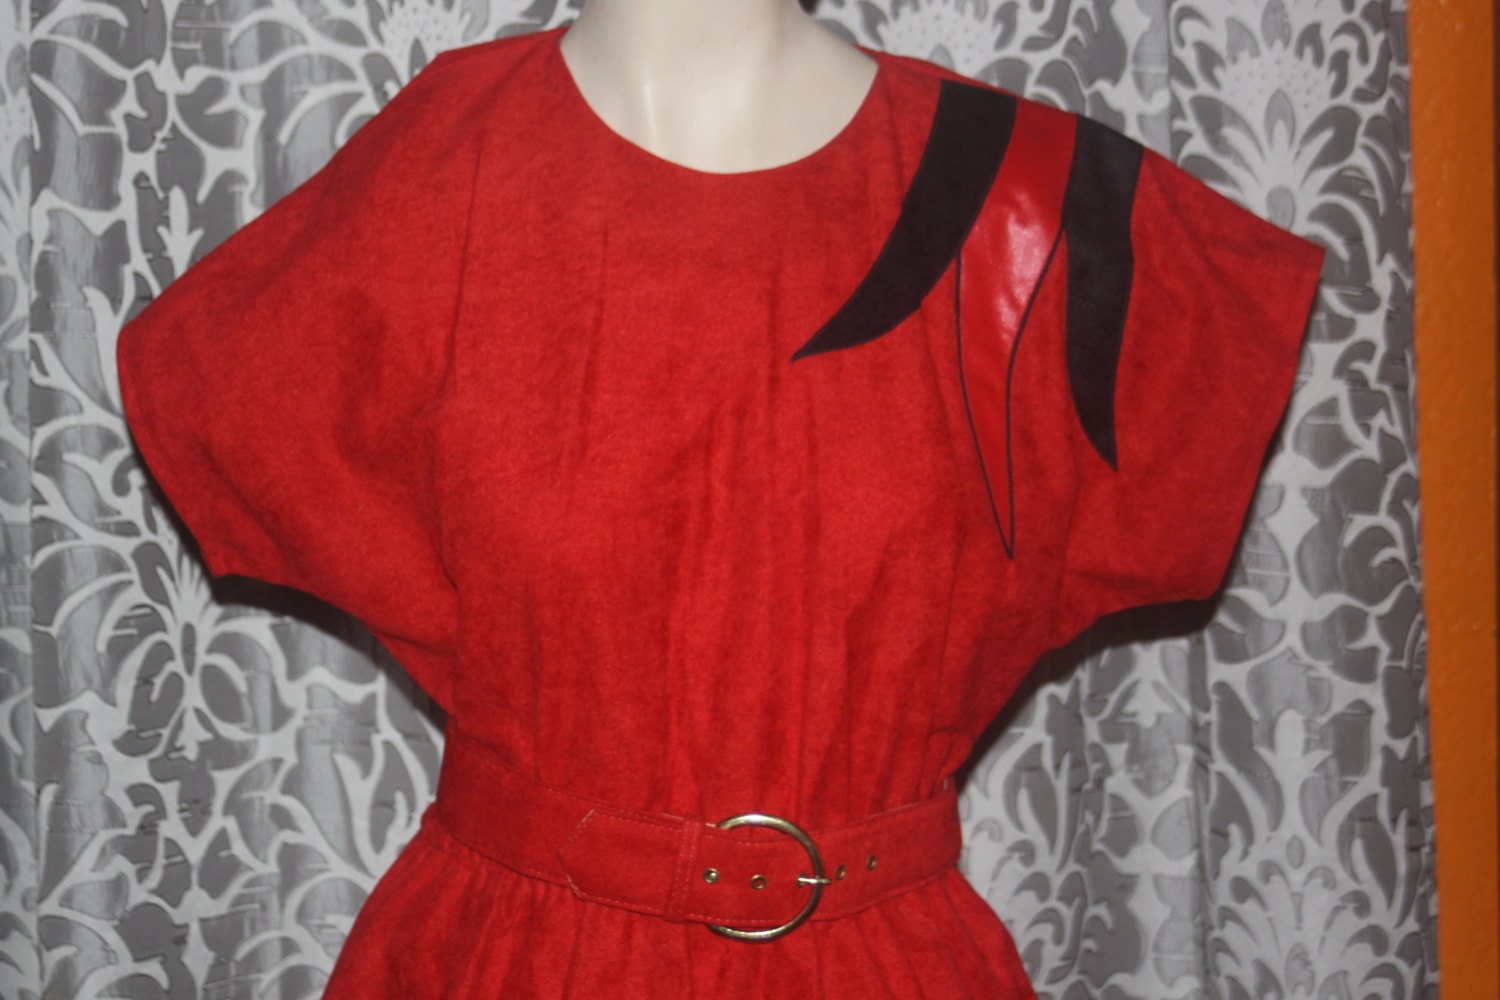 Vintage 1980's Mod Bold Red Peplum Dress M 9